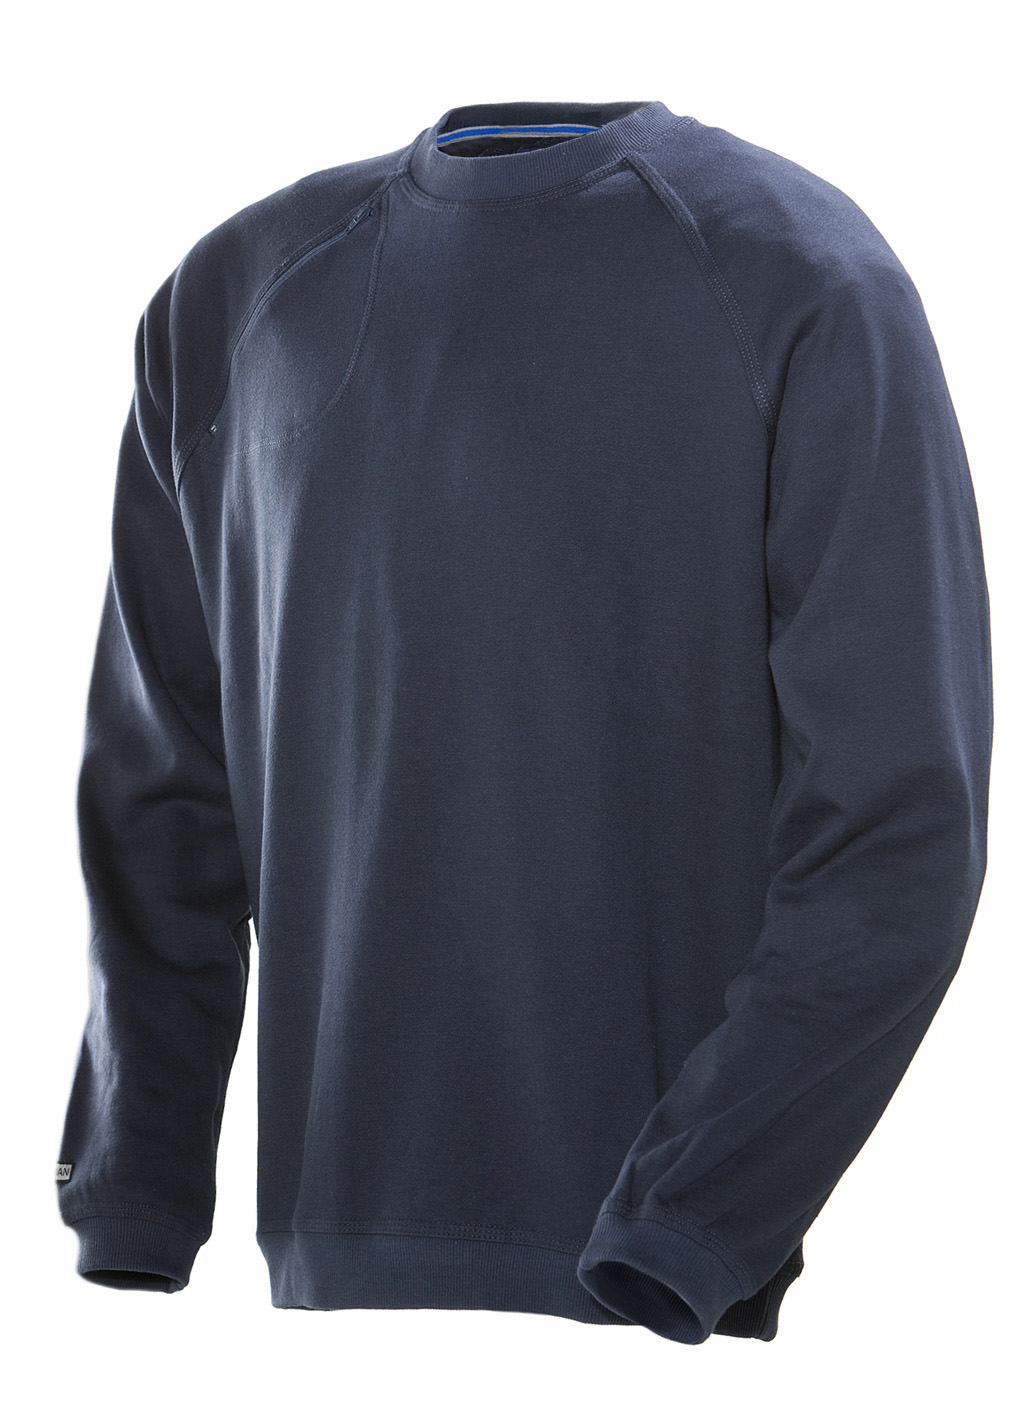 5122 Sweatshirt L bleu marine